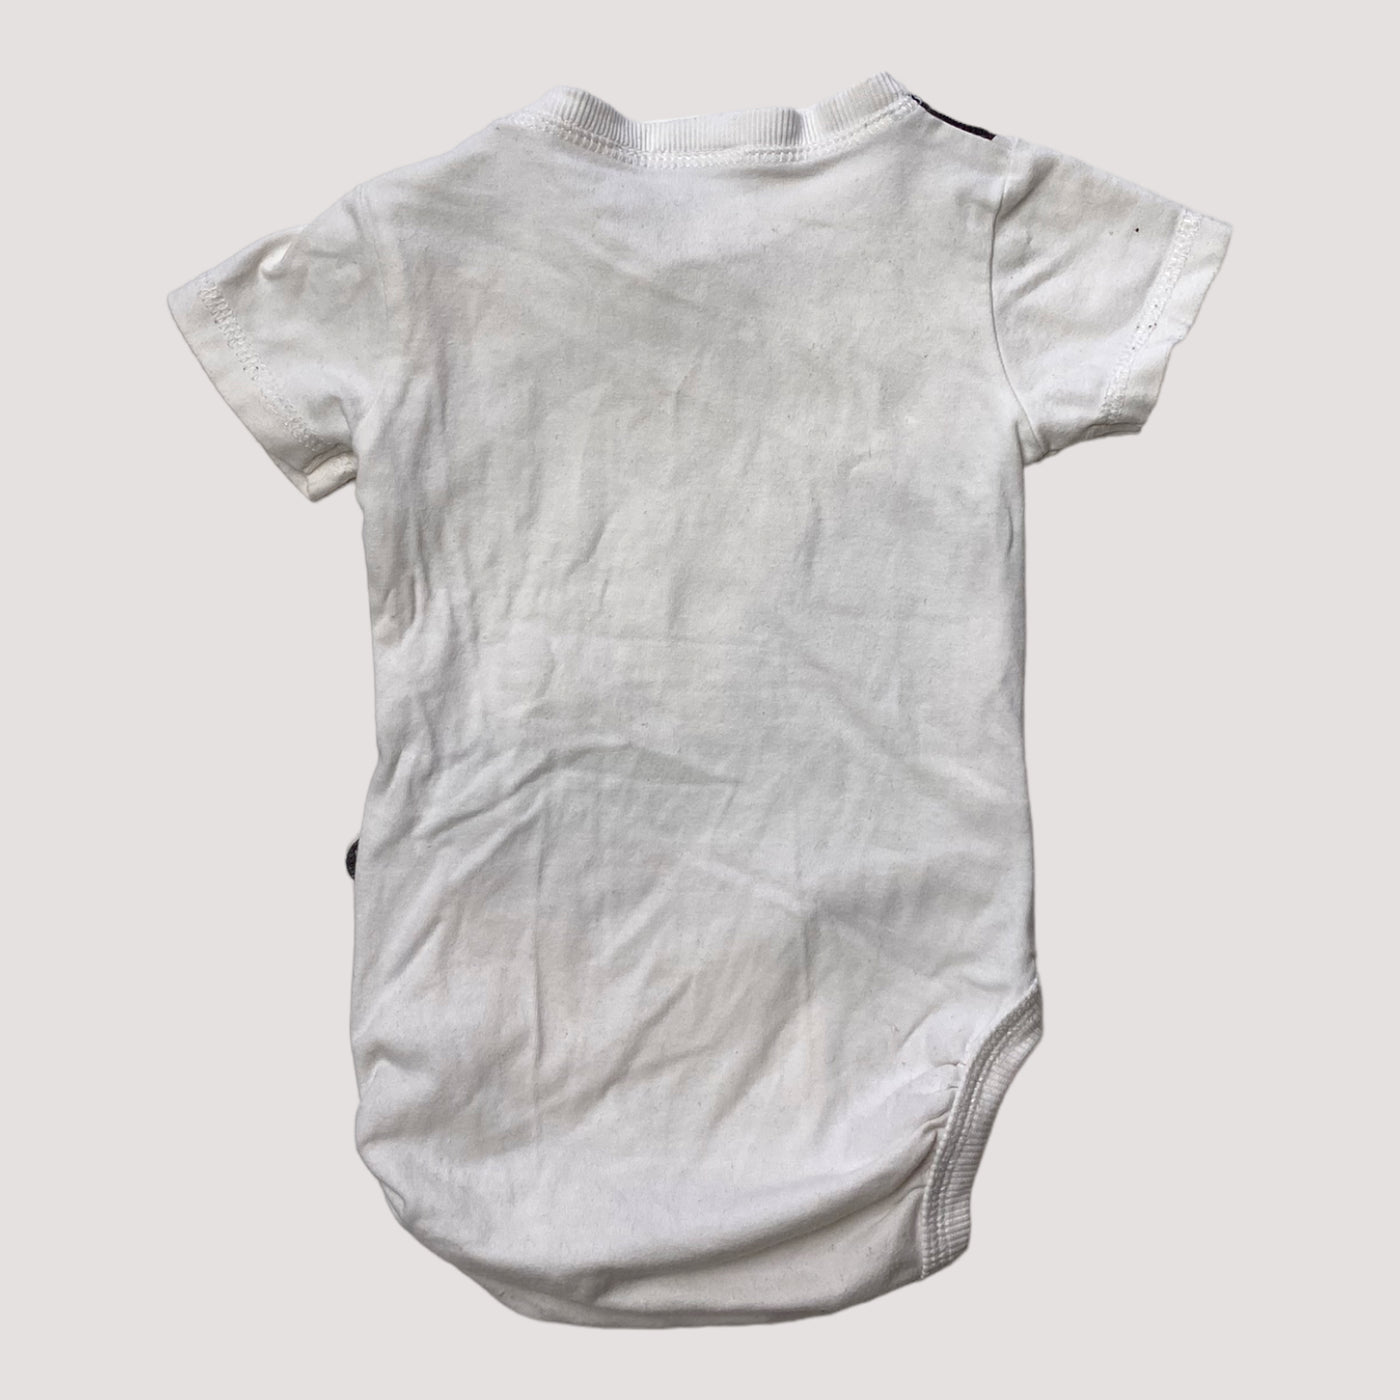 Mainio t-shirt body, ivory | 62/68cm